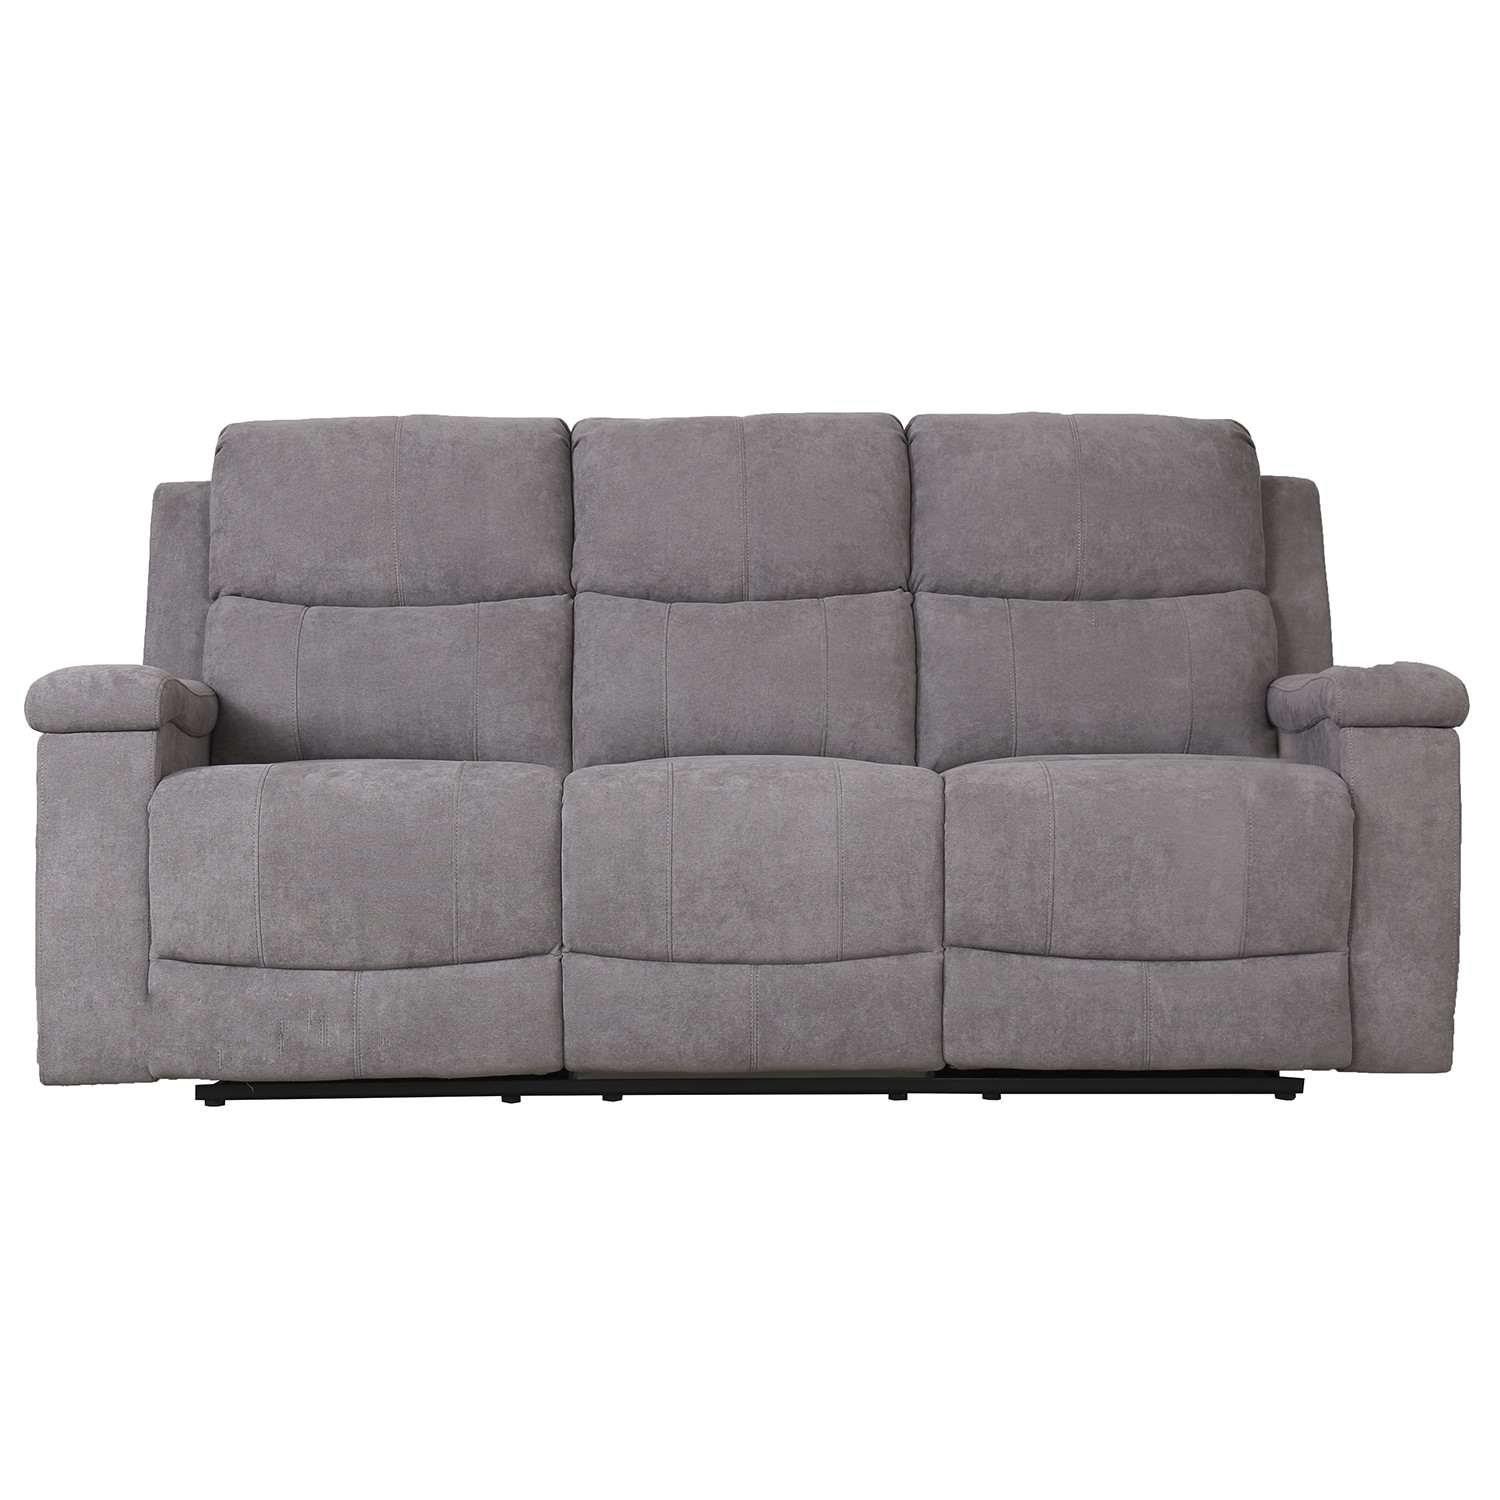 Ledbury 3 Seater Grey Fabric Manual Recliner Sofa Image 3